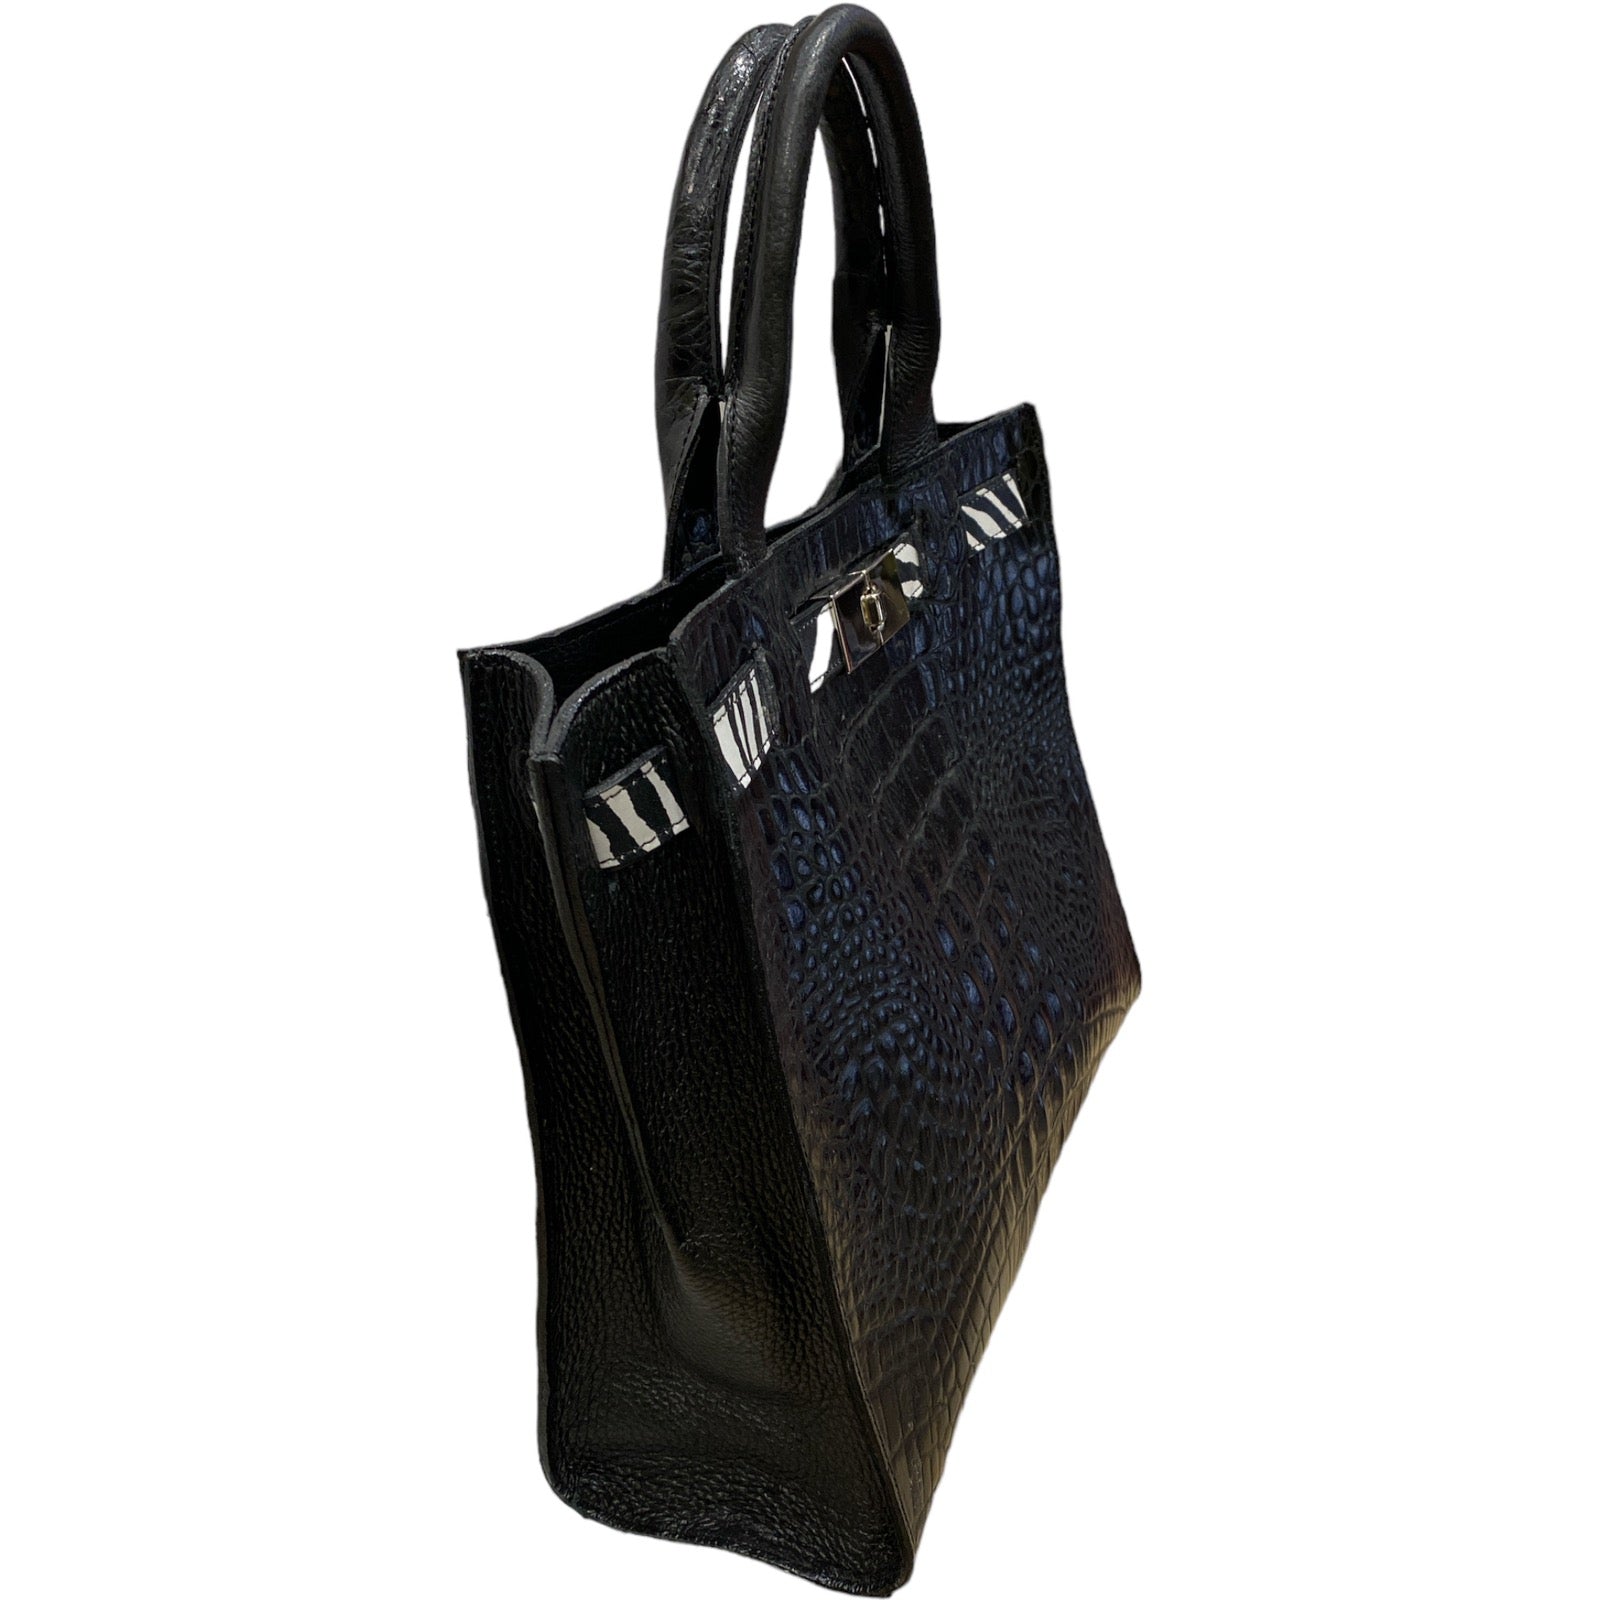 Greta L. Black alligator-print leather tote bag